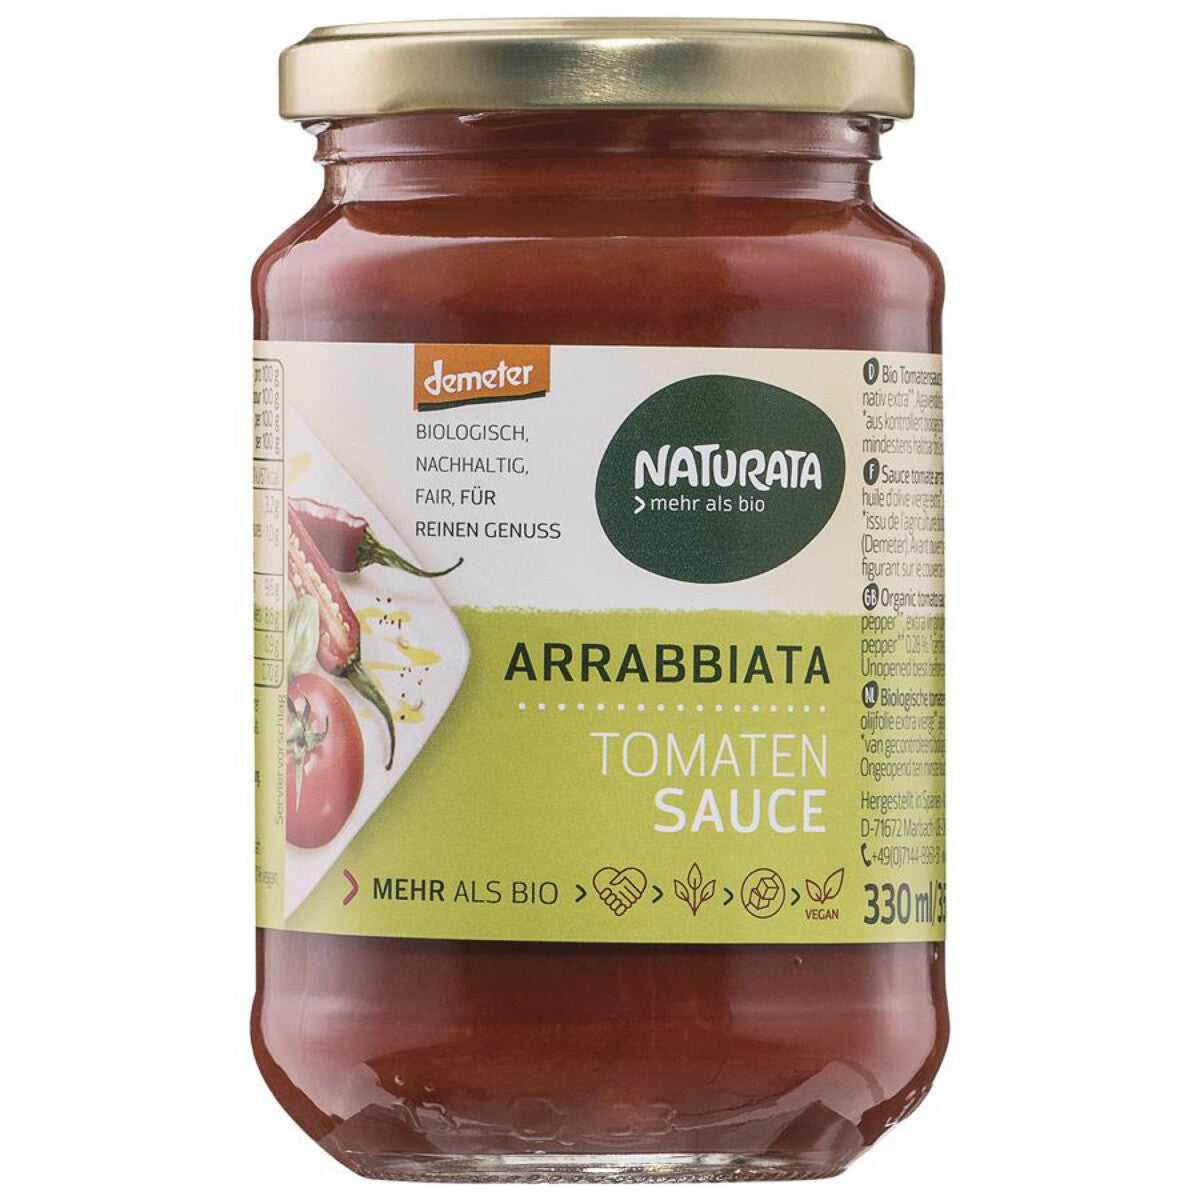 NATURATA Tomatensauce Arrabbiata - 330 ml